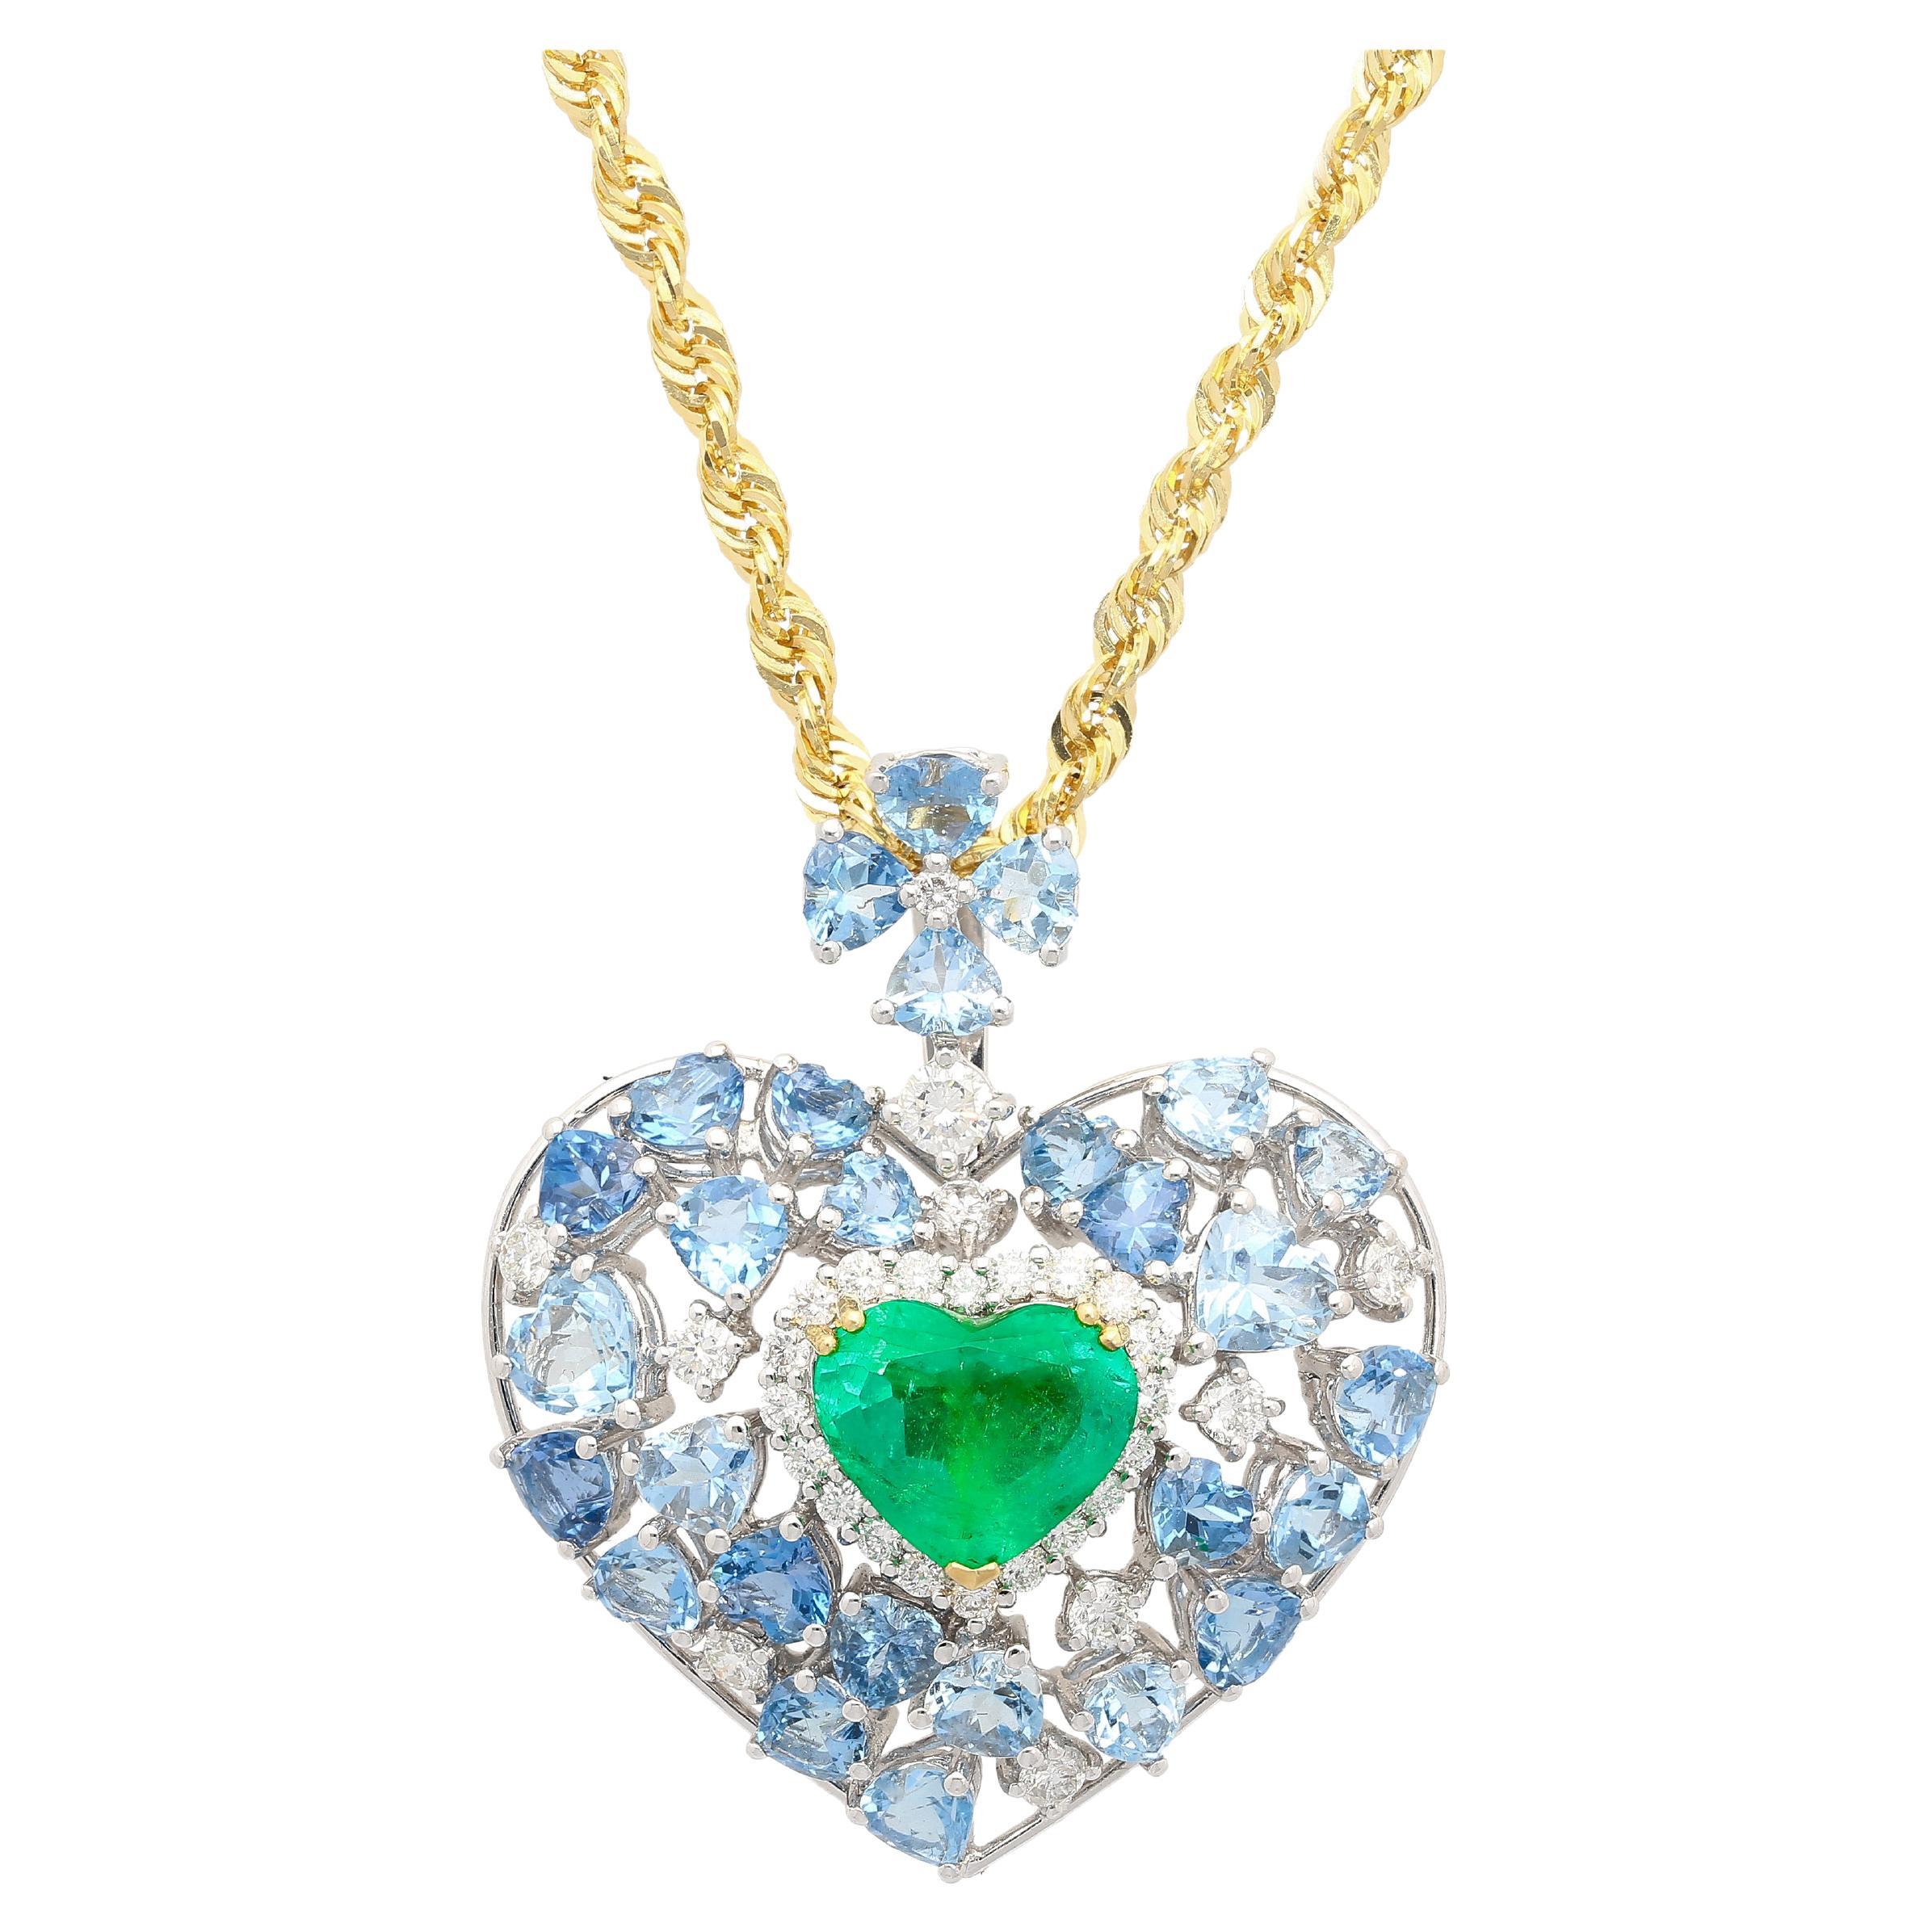 10 Carat Heart-Shape Colombian Emerald, Aquamarine, and Diamond 18K Necklace